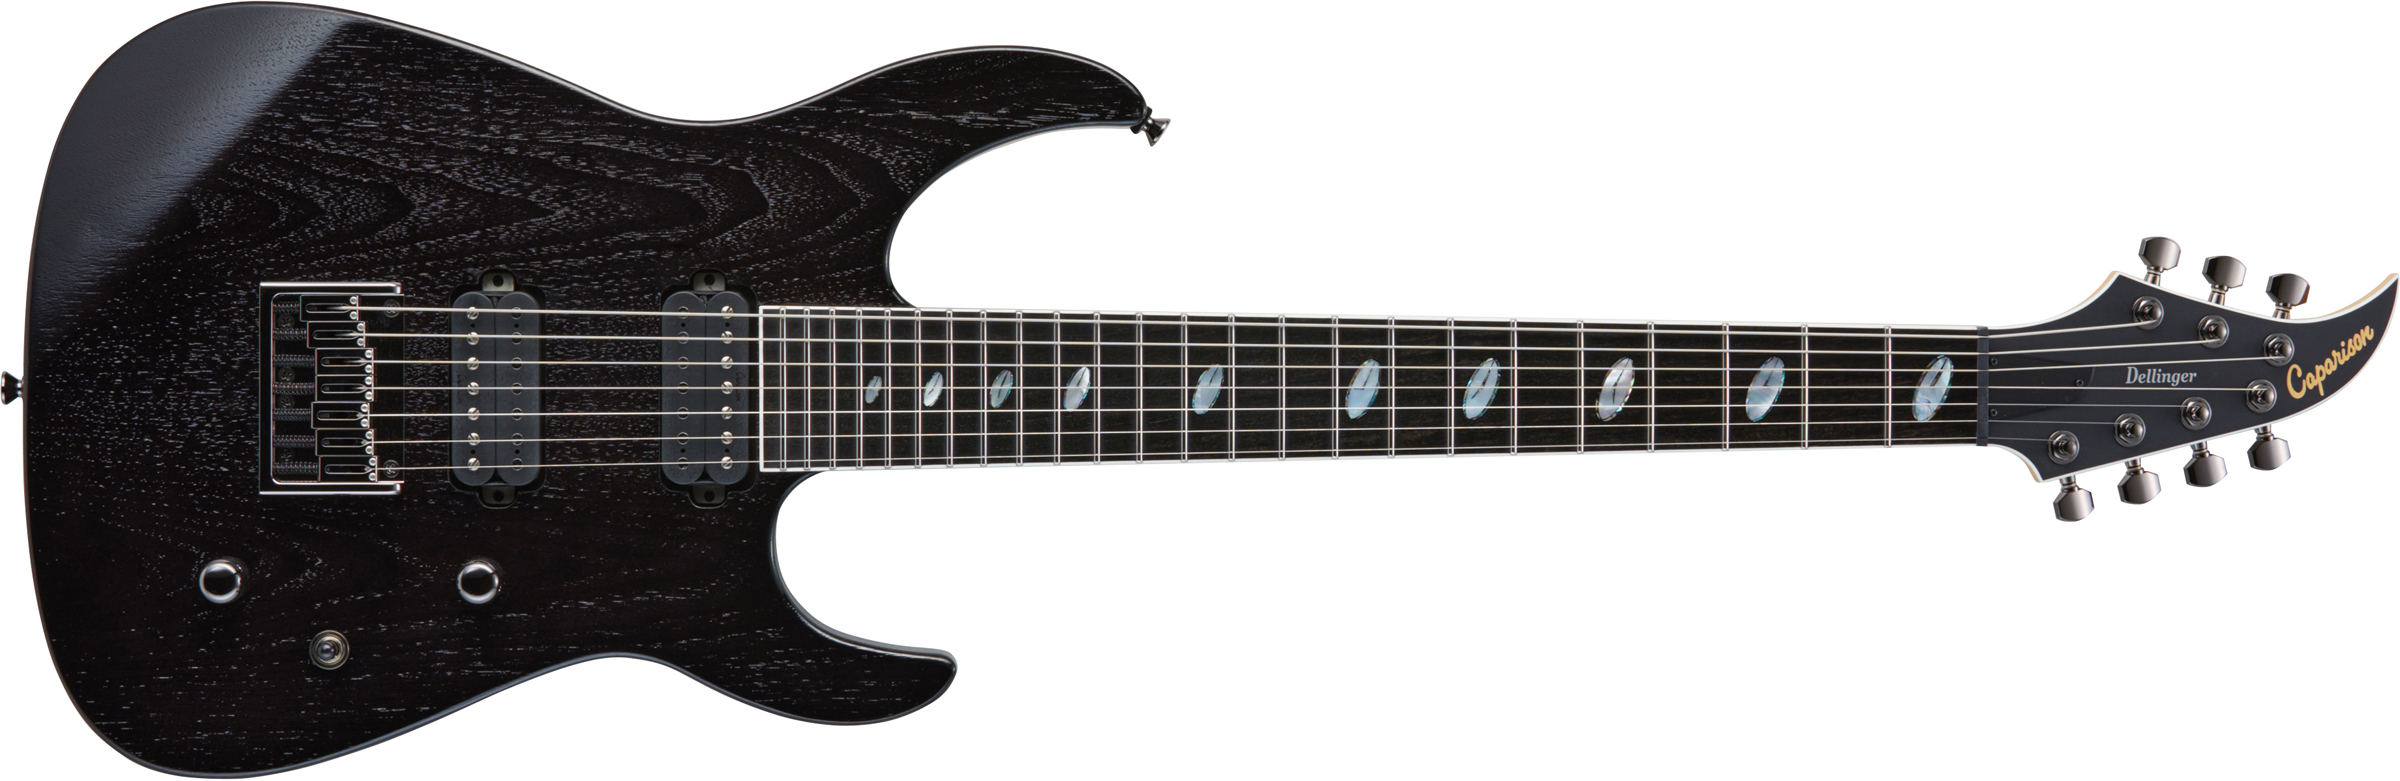 Caparison Guitars Dellinger7-WB-FX EF